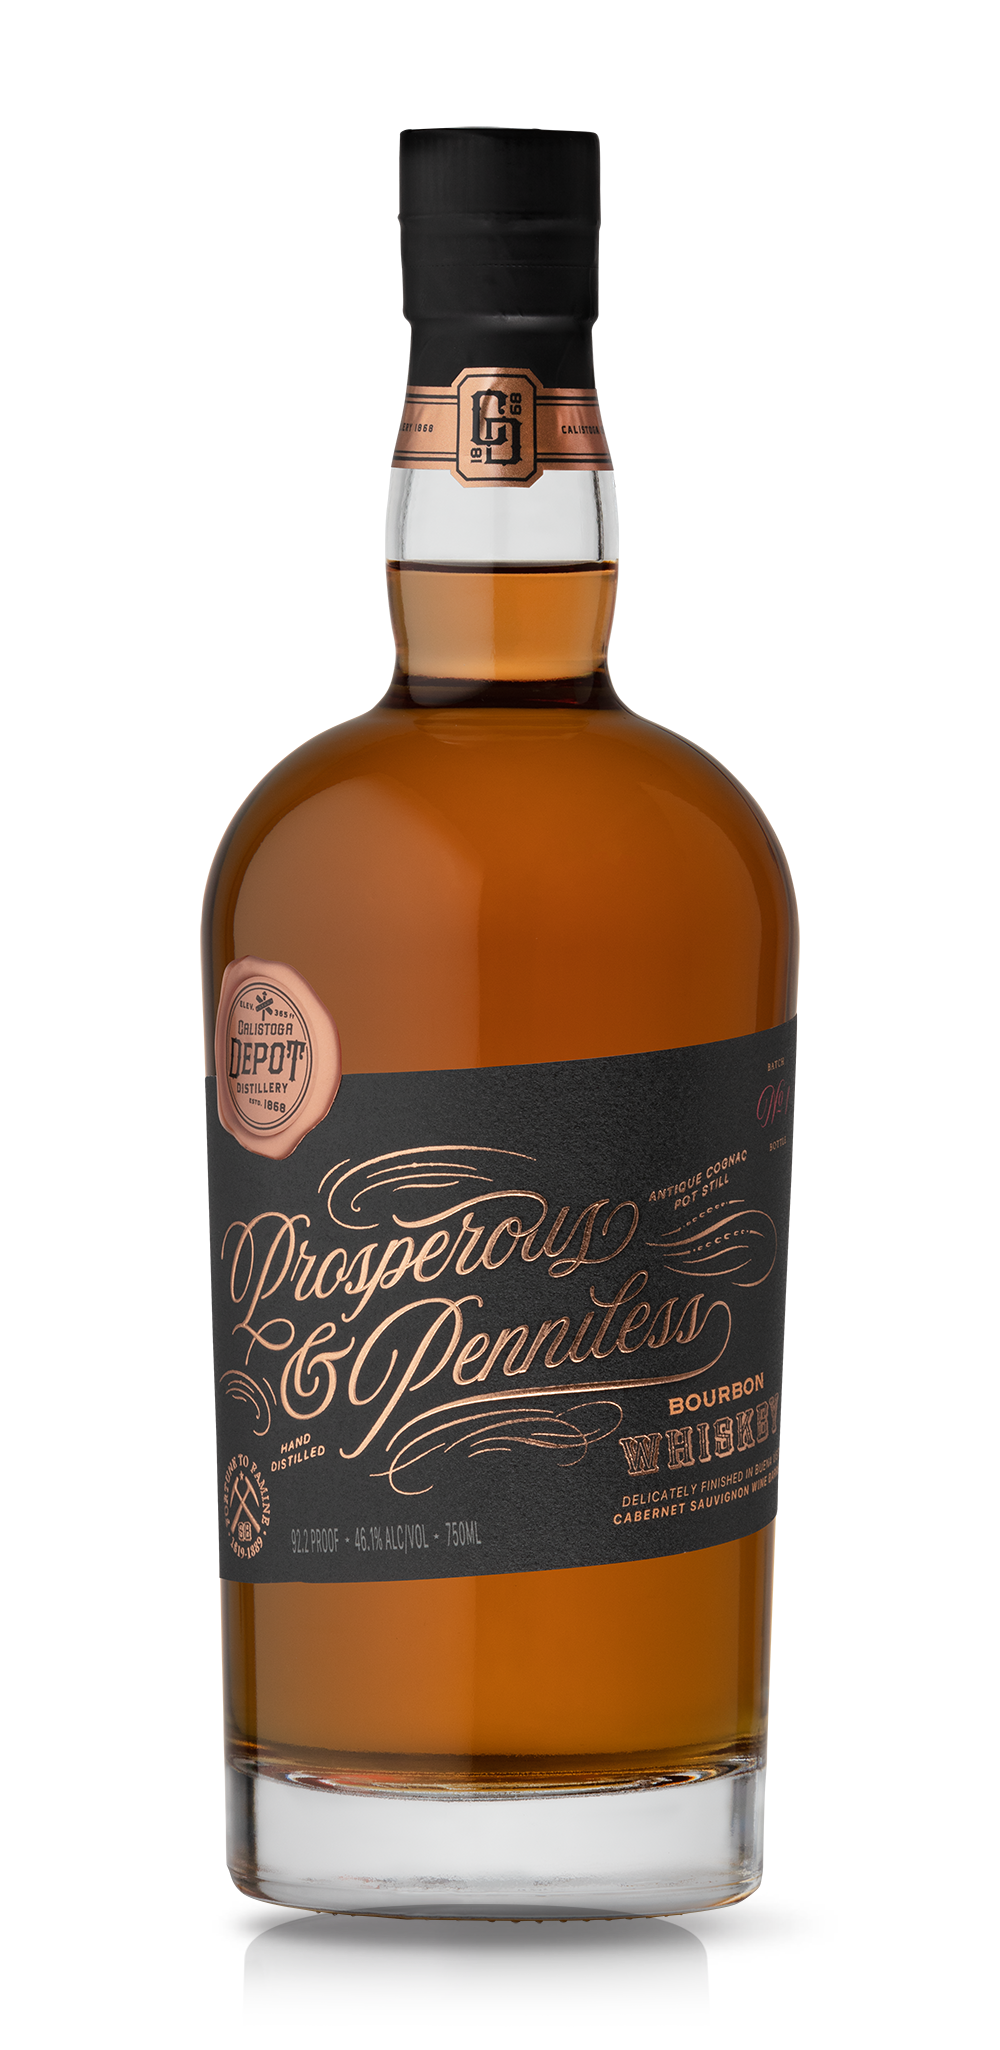 Prosperous & Penniless Bourbon Whiskey from the Calistoga Depot Spirits